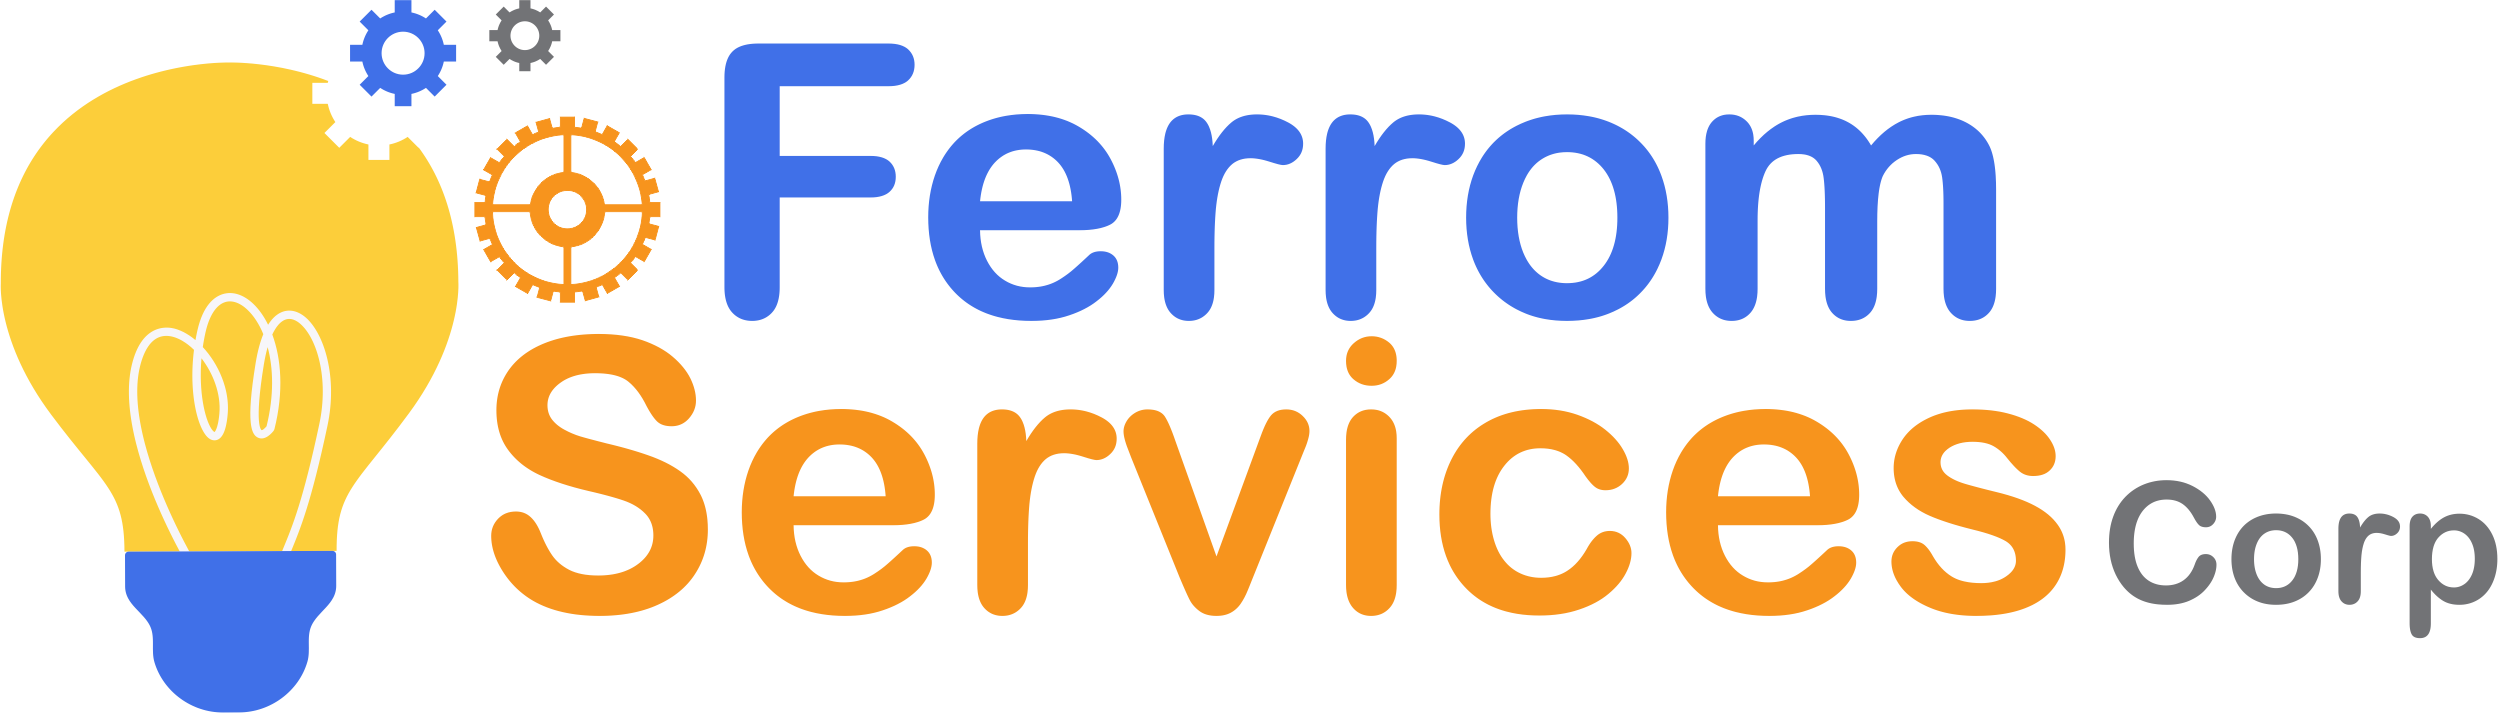 logo ferrom services last